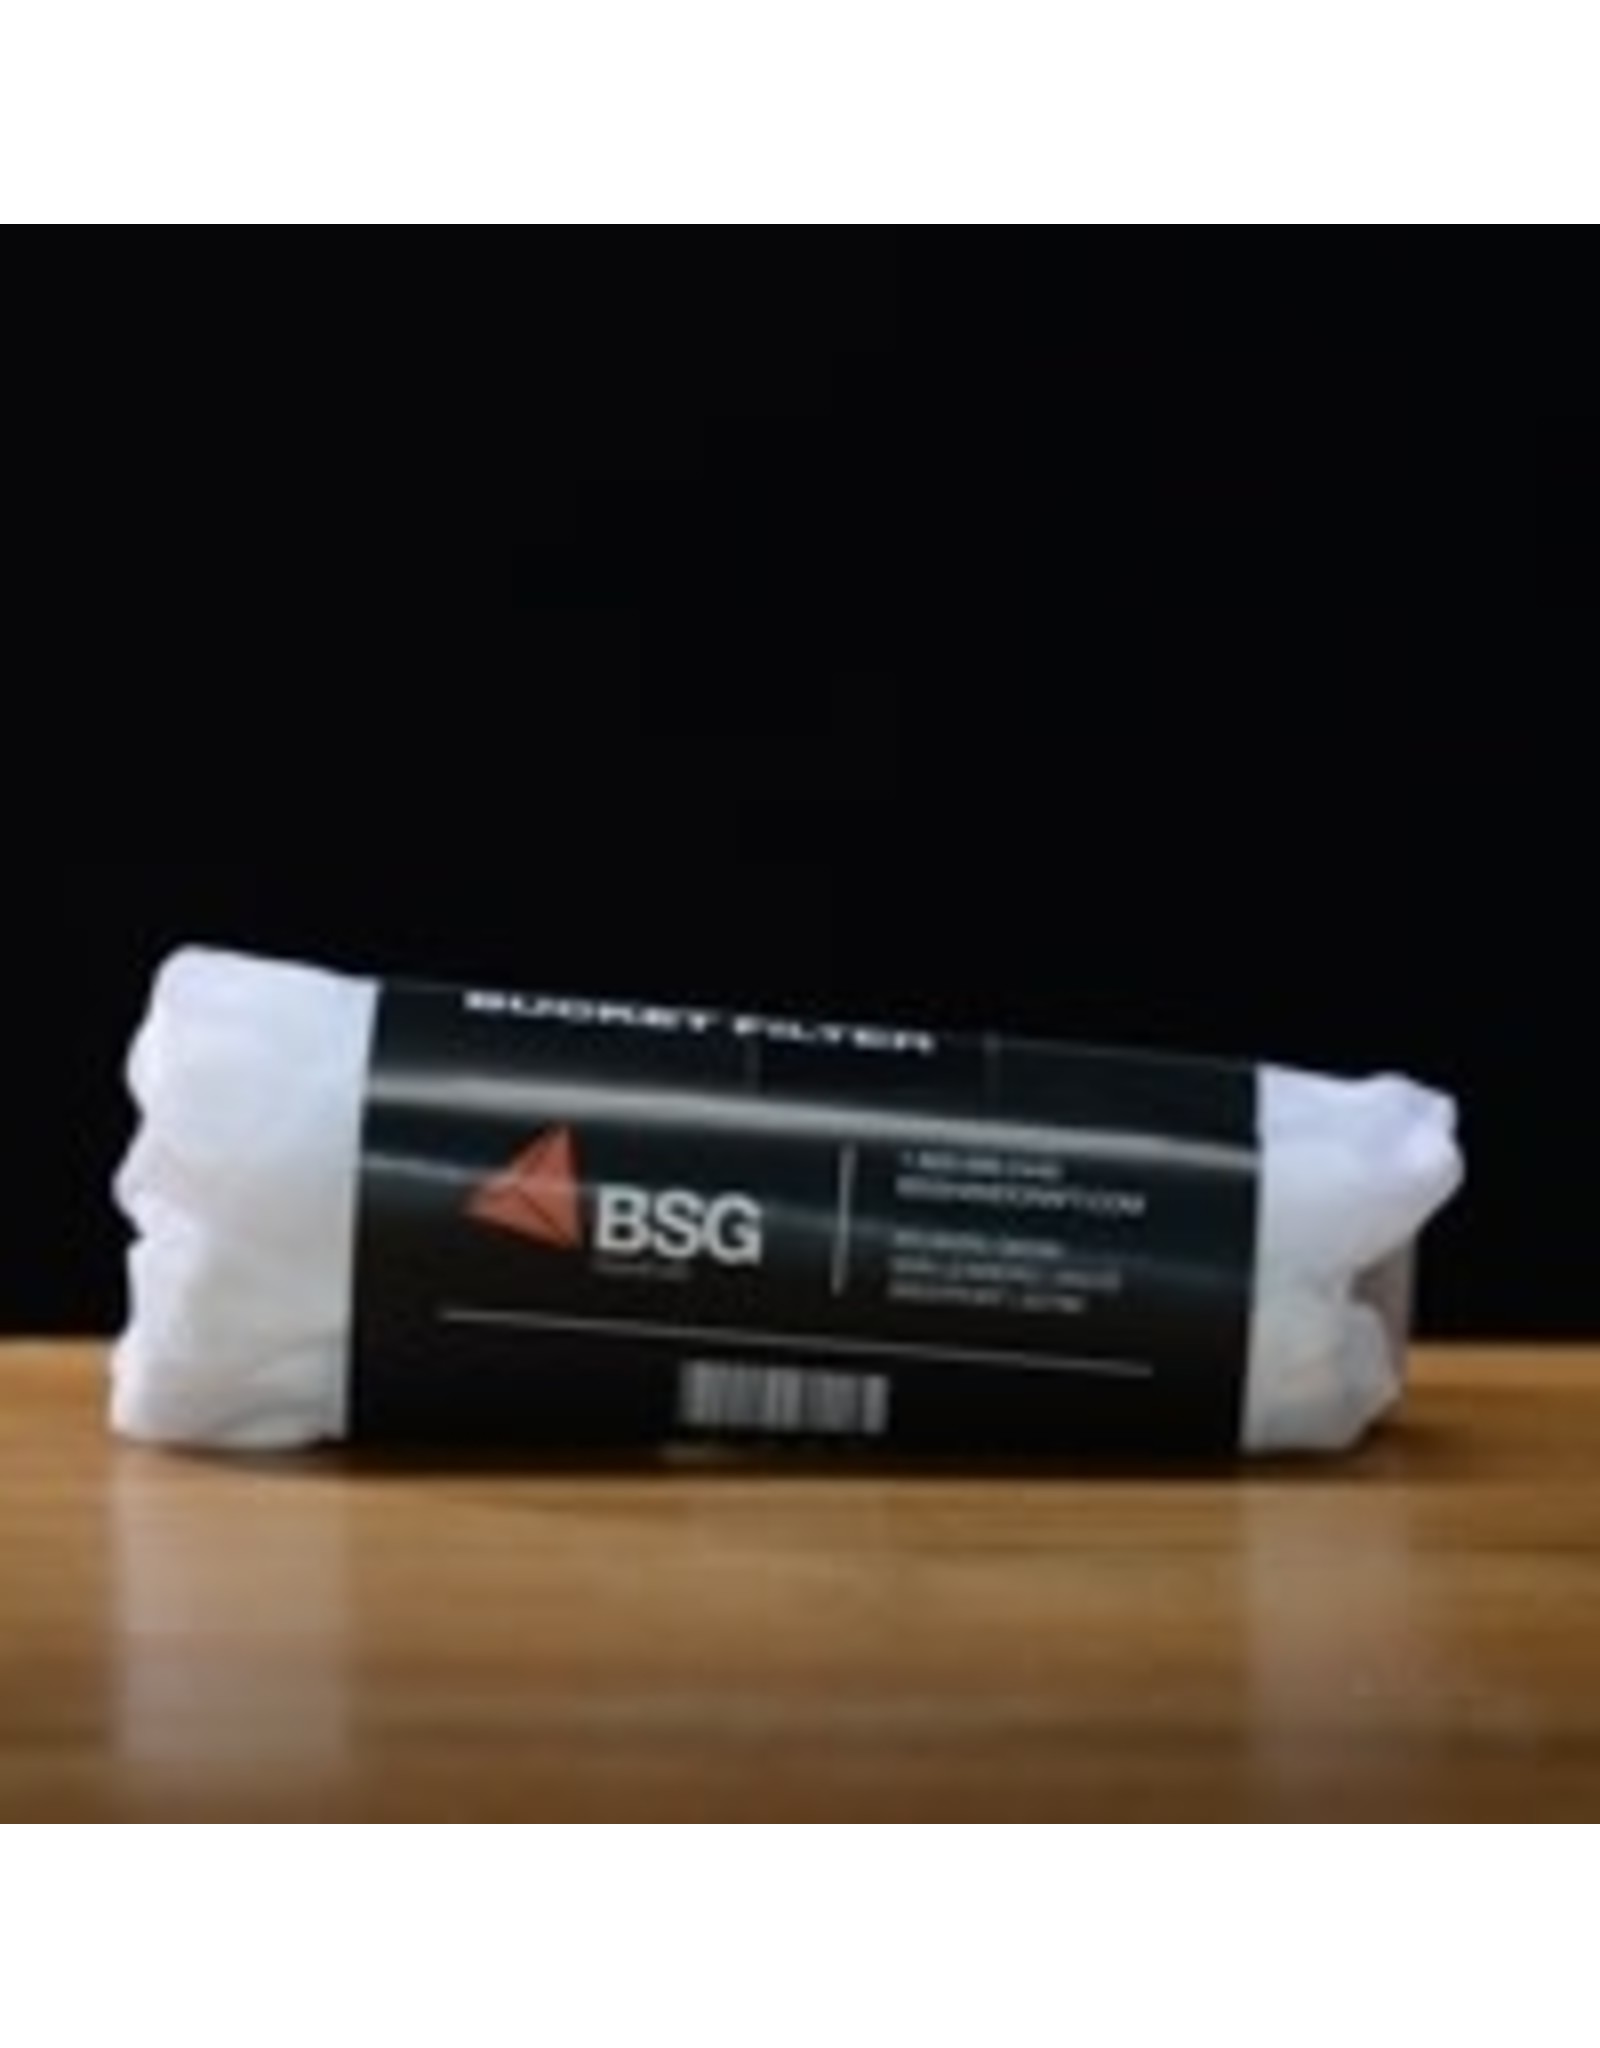 BSG Bucket Filter Bag Fine Mesh 6.5-7.8 gal